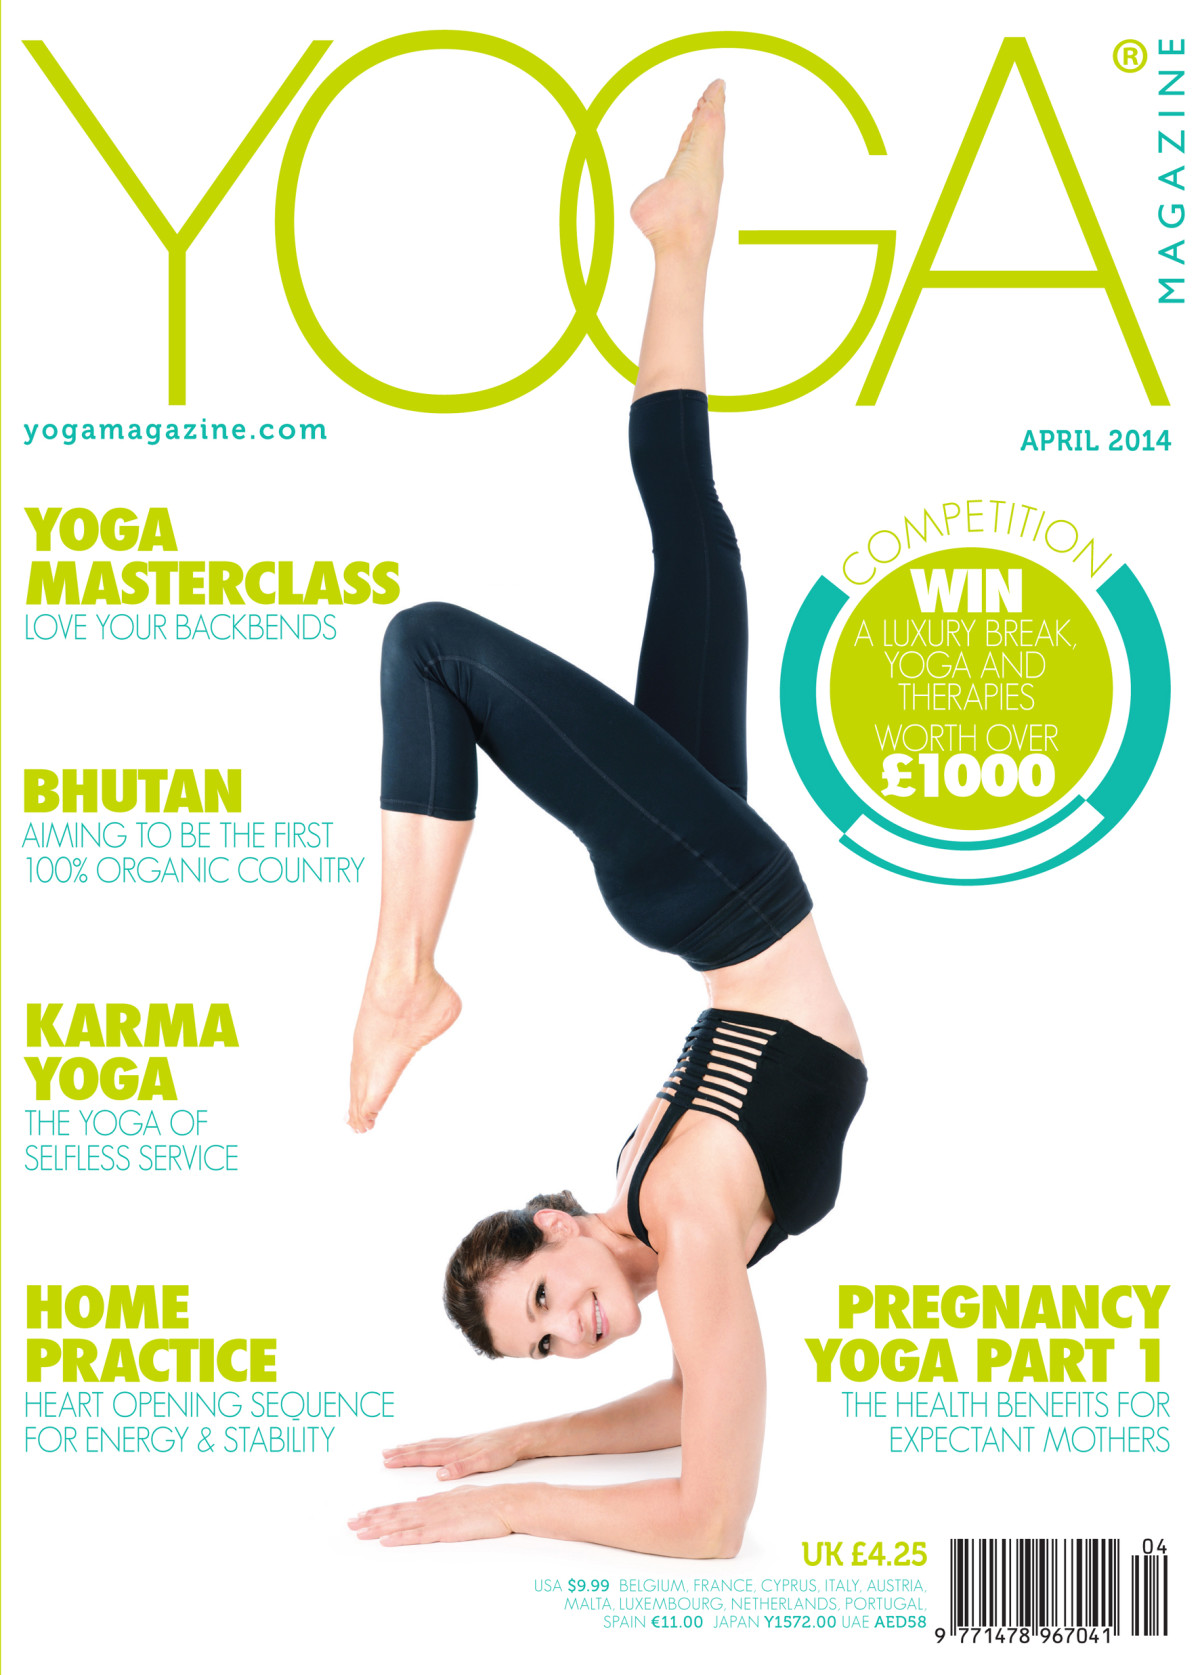 Pregnancy Yoga – April 2014